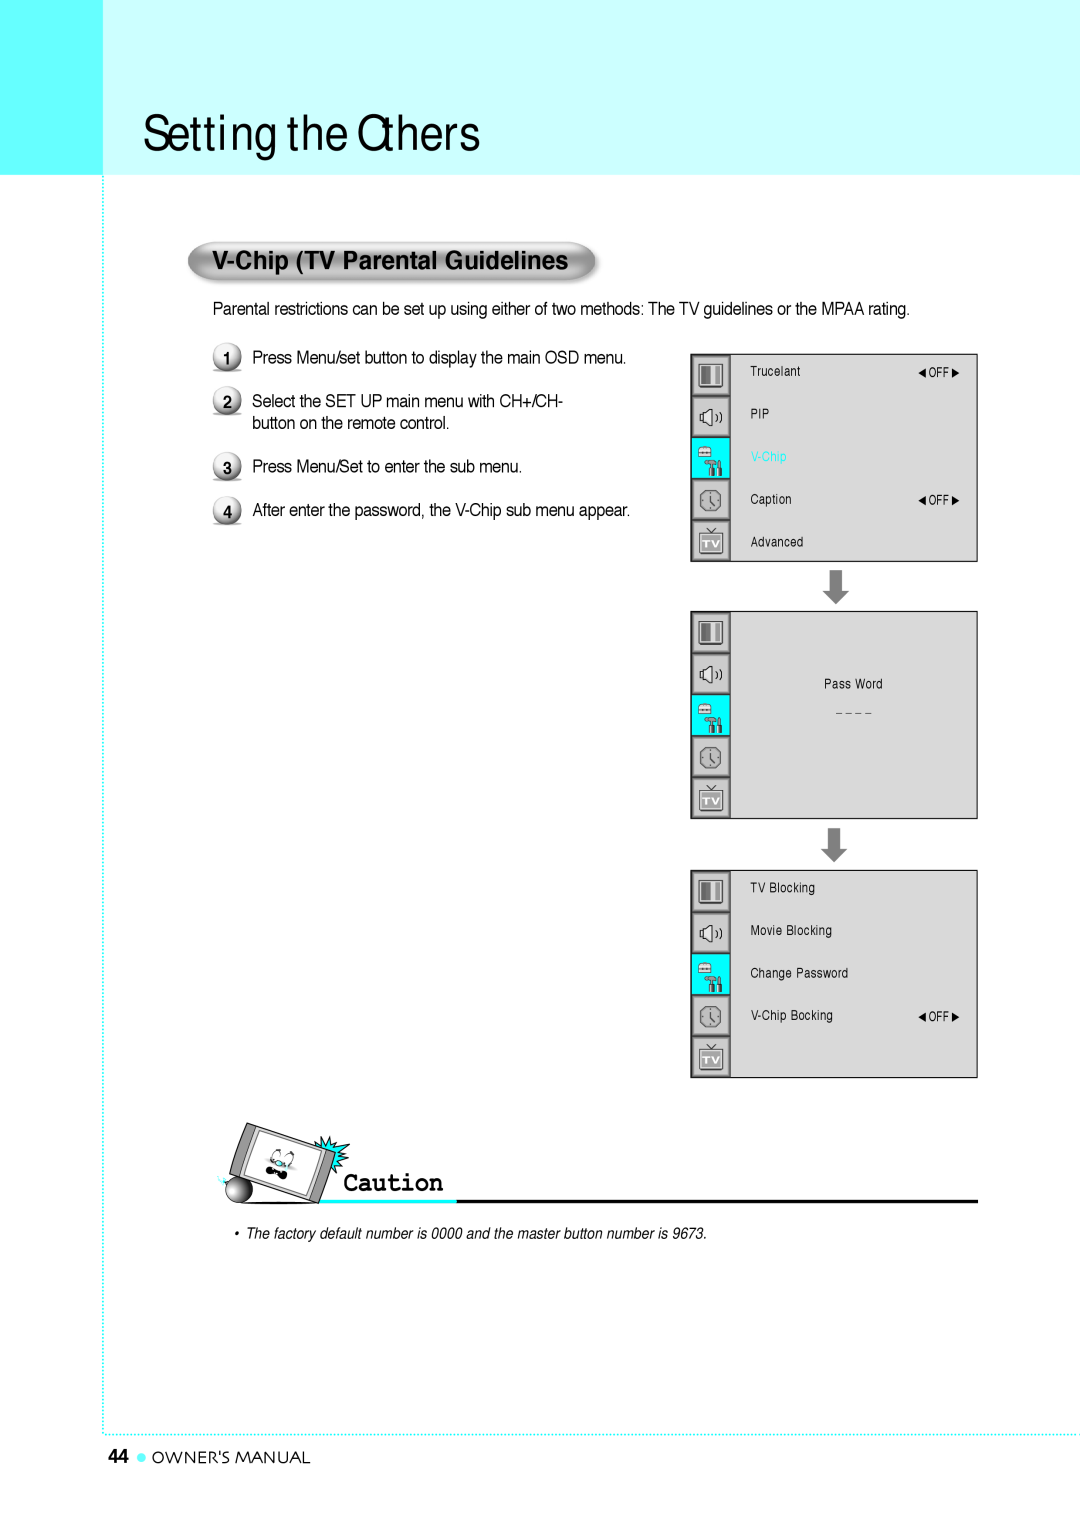 InFocus TD40 NTSC, TD32 manual V-Chip TV Parental Guidelines, Setting the Others 